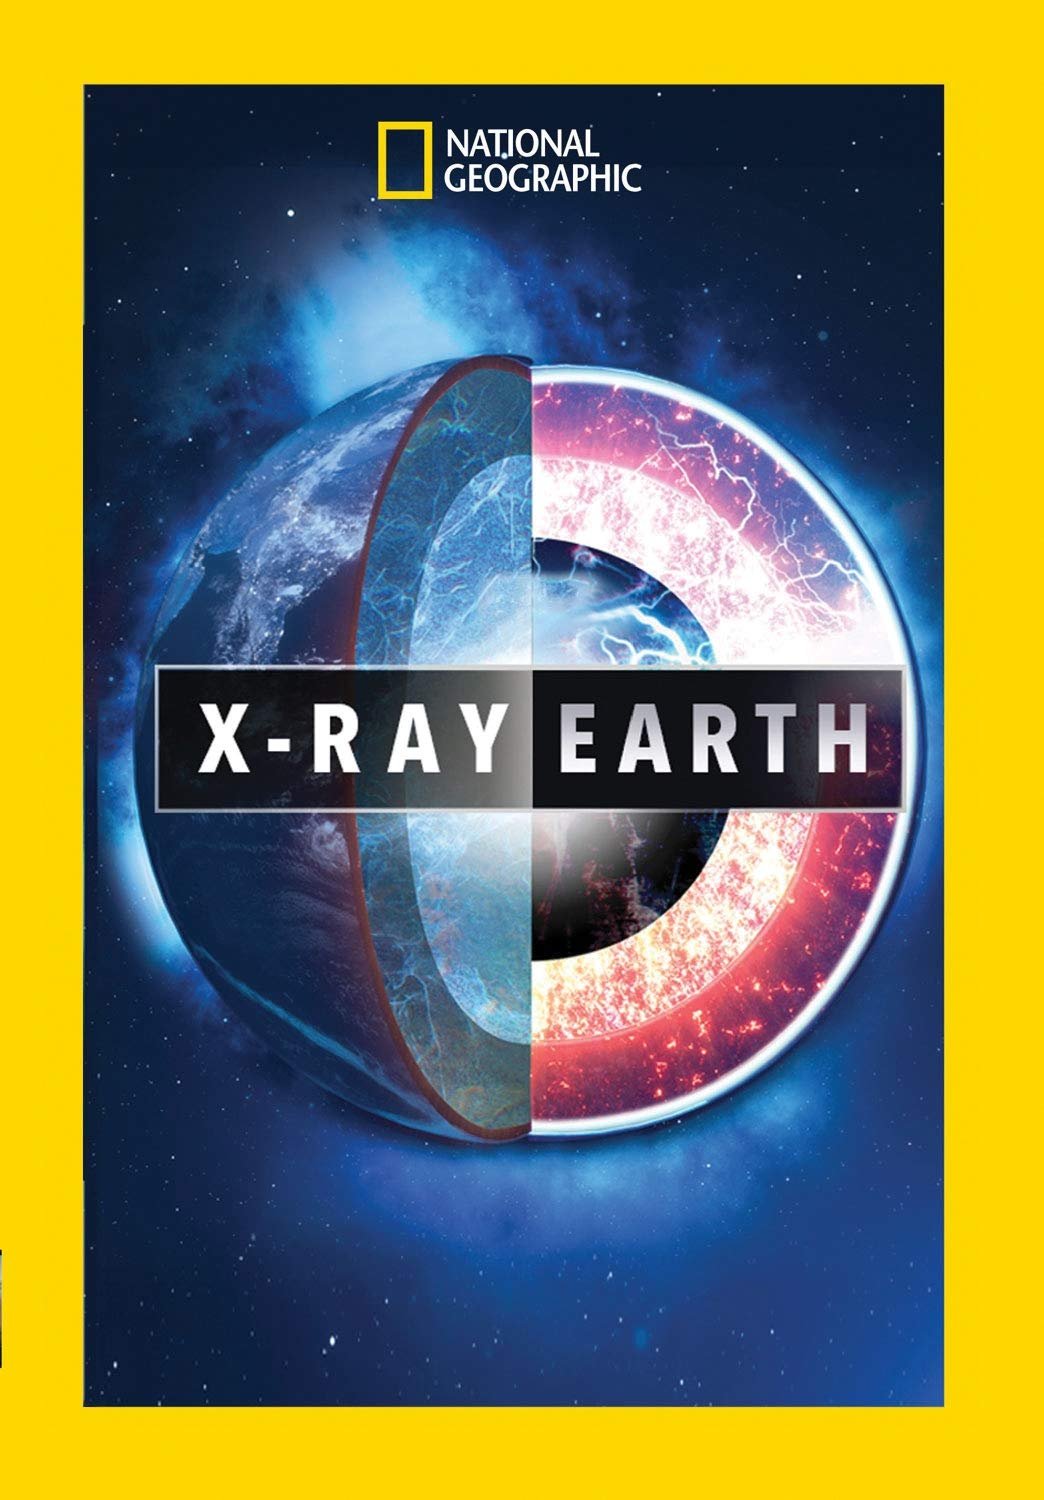 National Geographic_X-Ray Earth.jpg